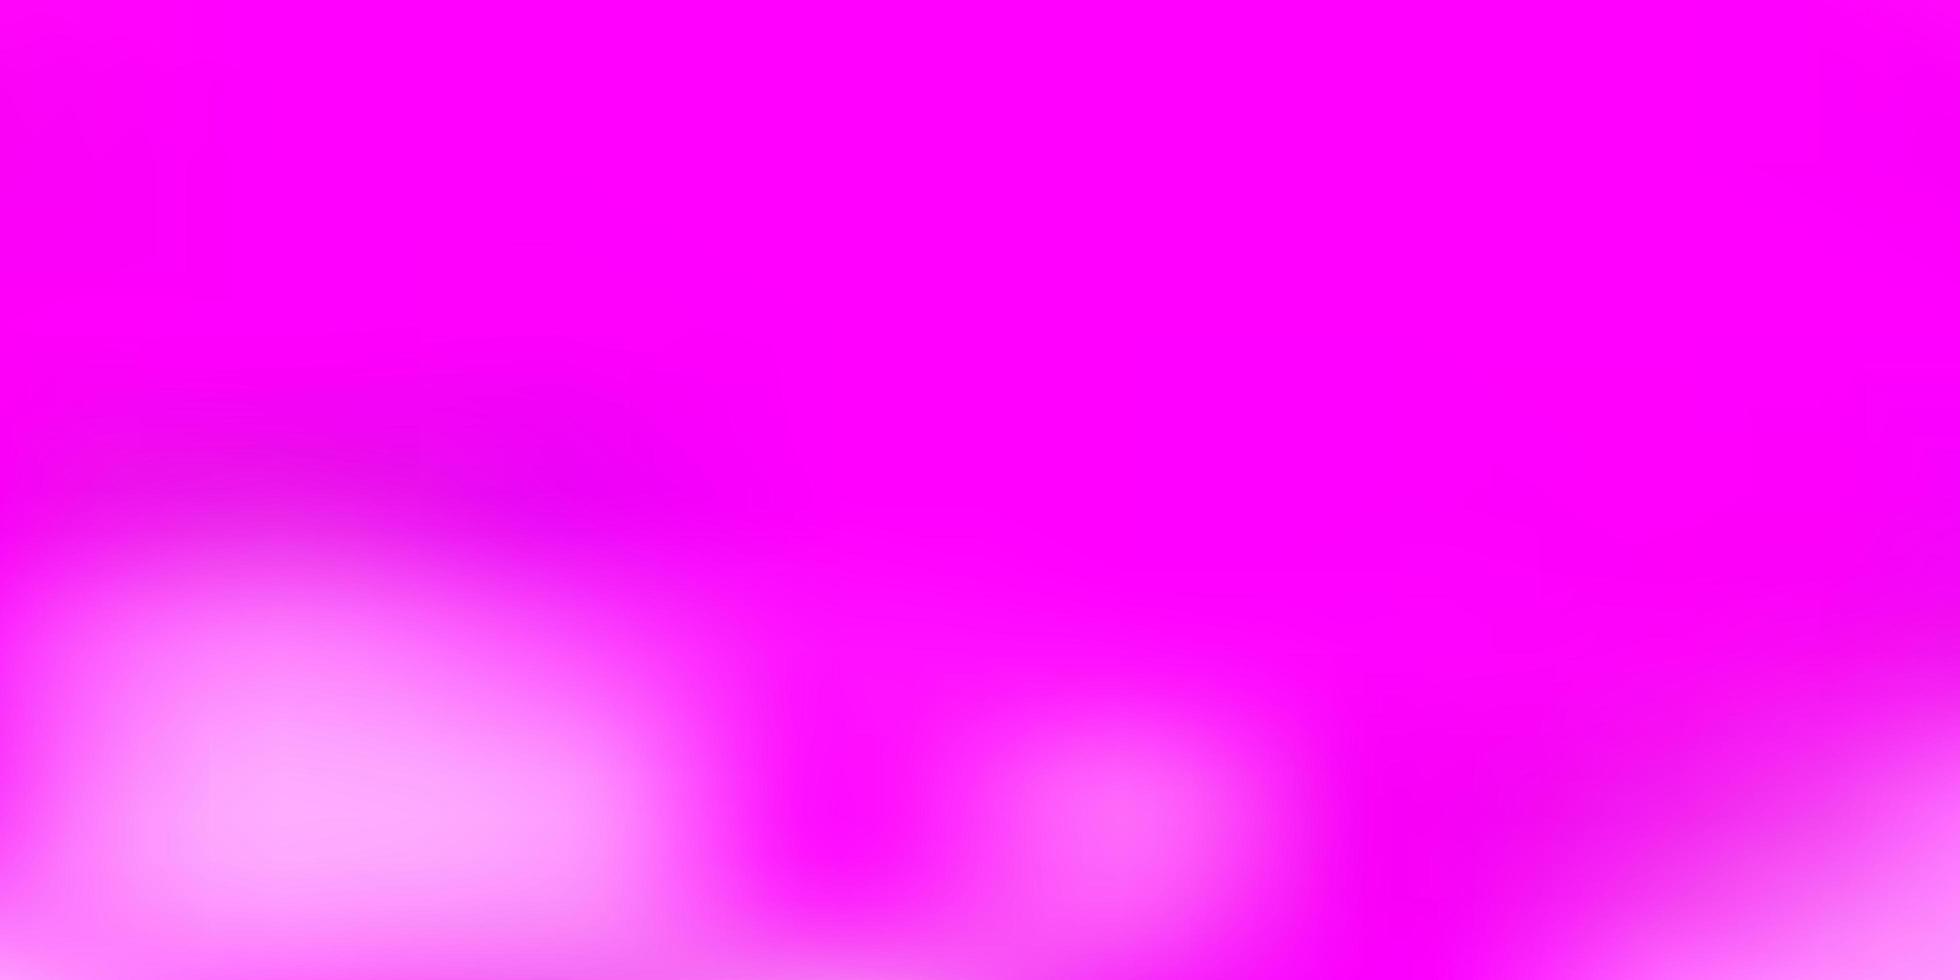 Light pink vector blurred backdrop.